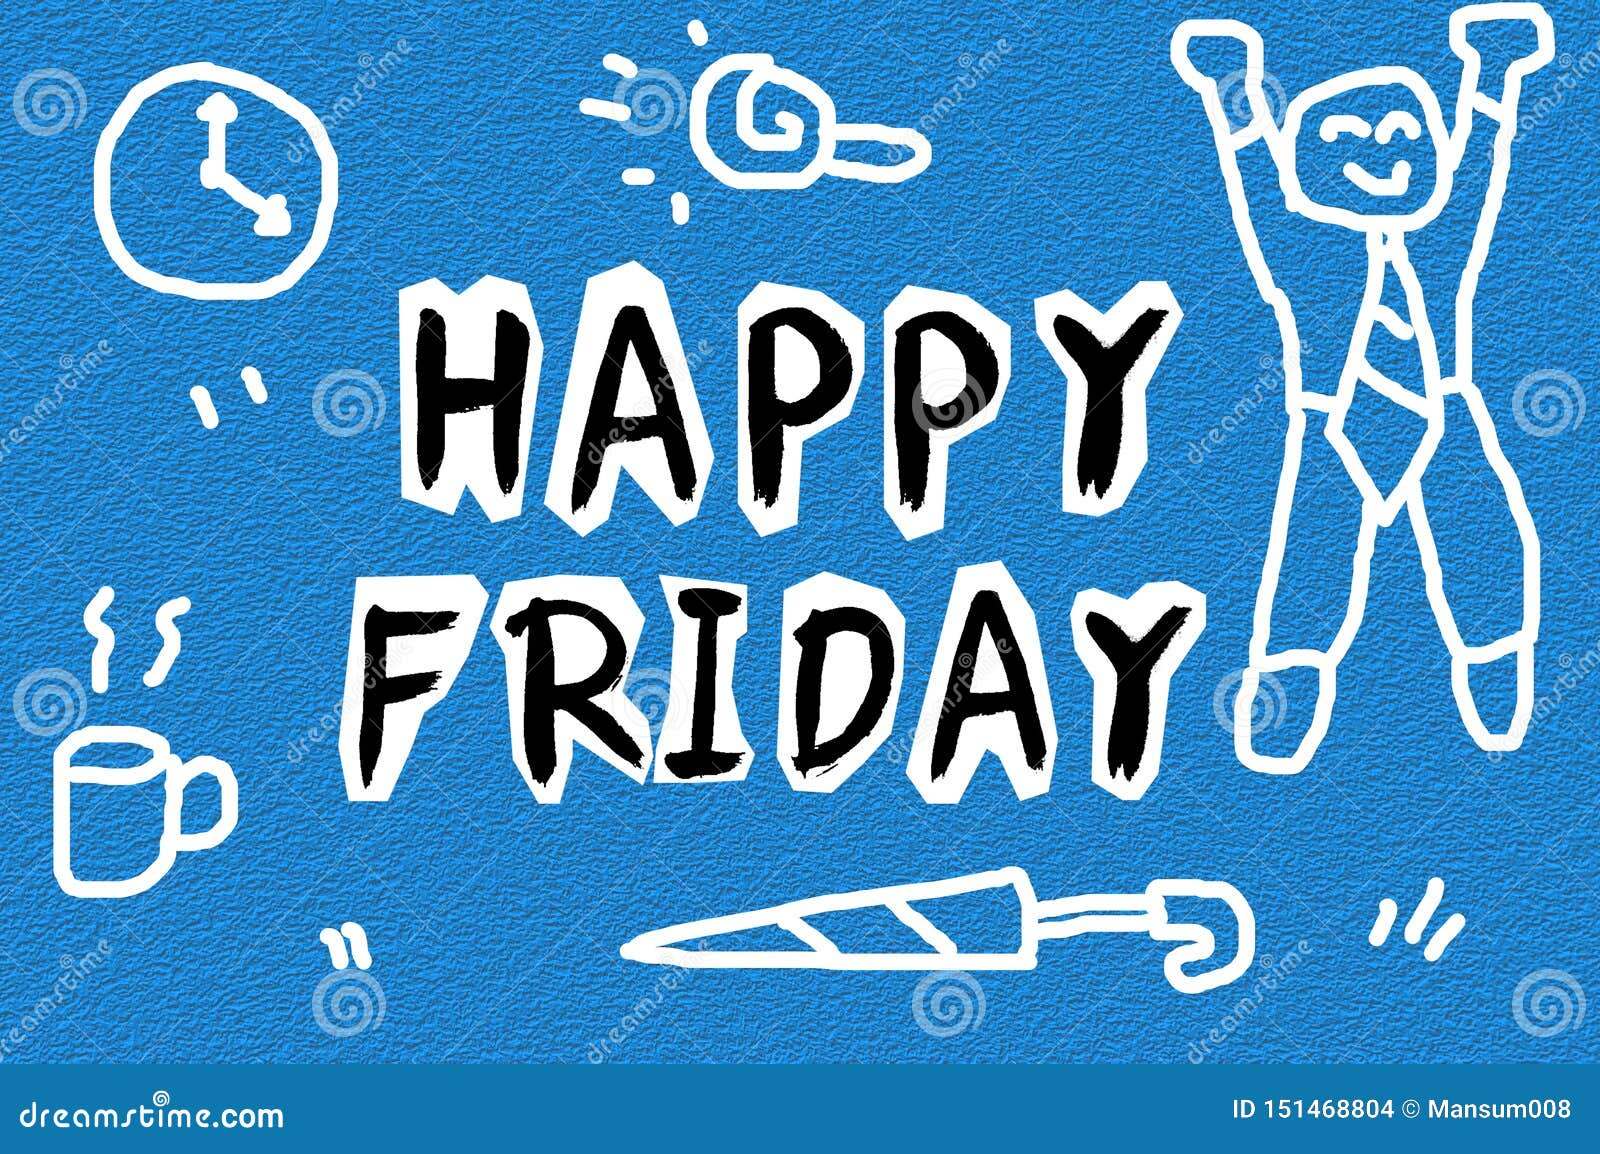 Text Happy Friday on Grunge Blue Illustration Background Stock ...